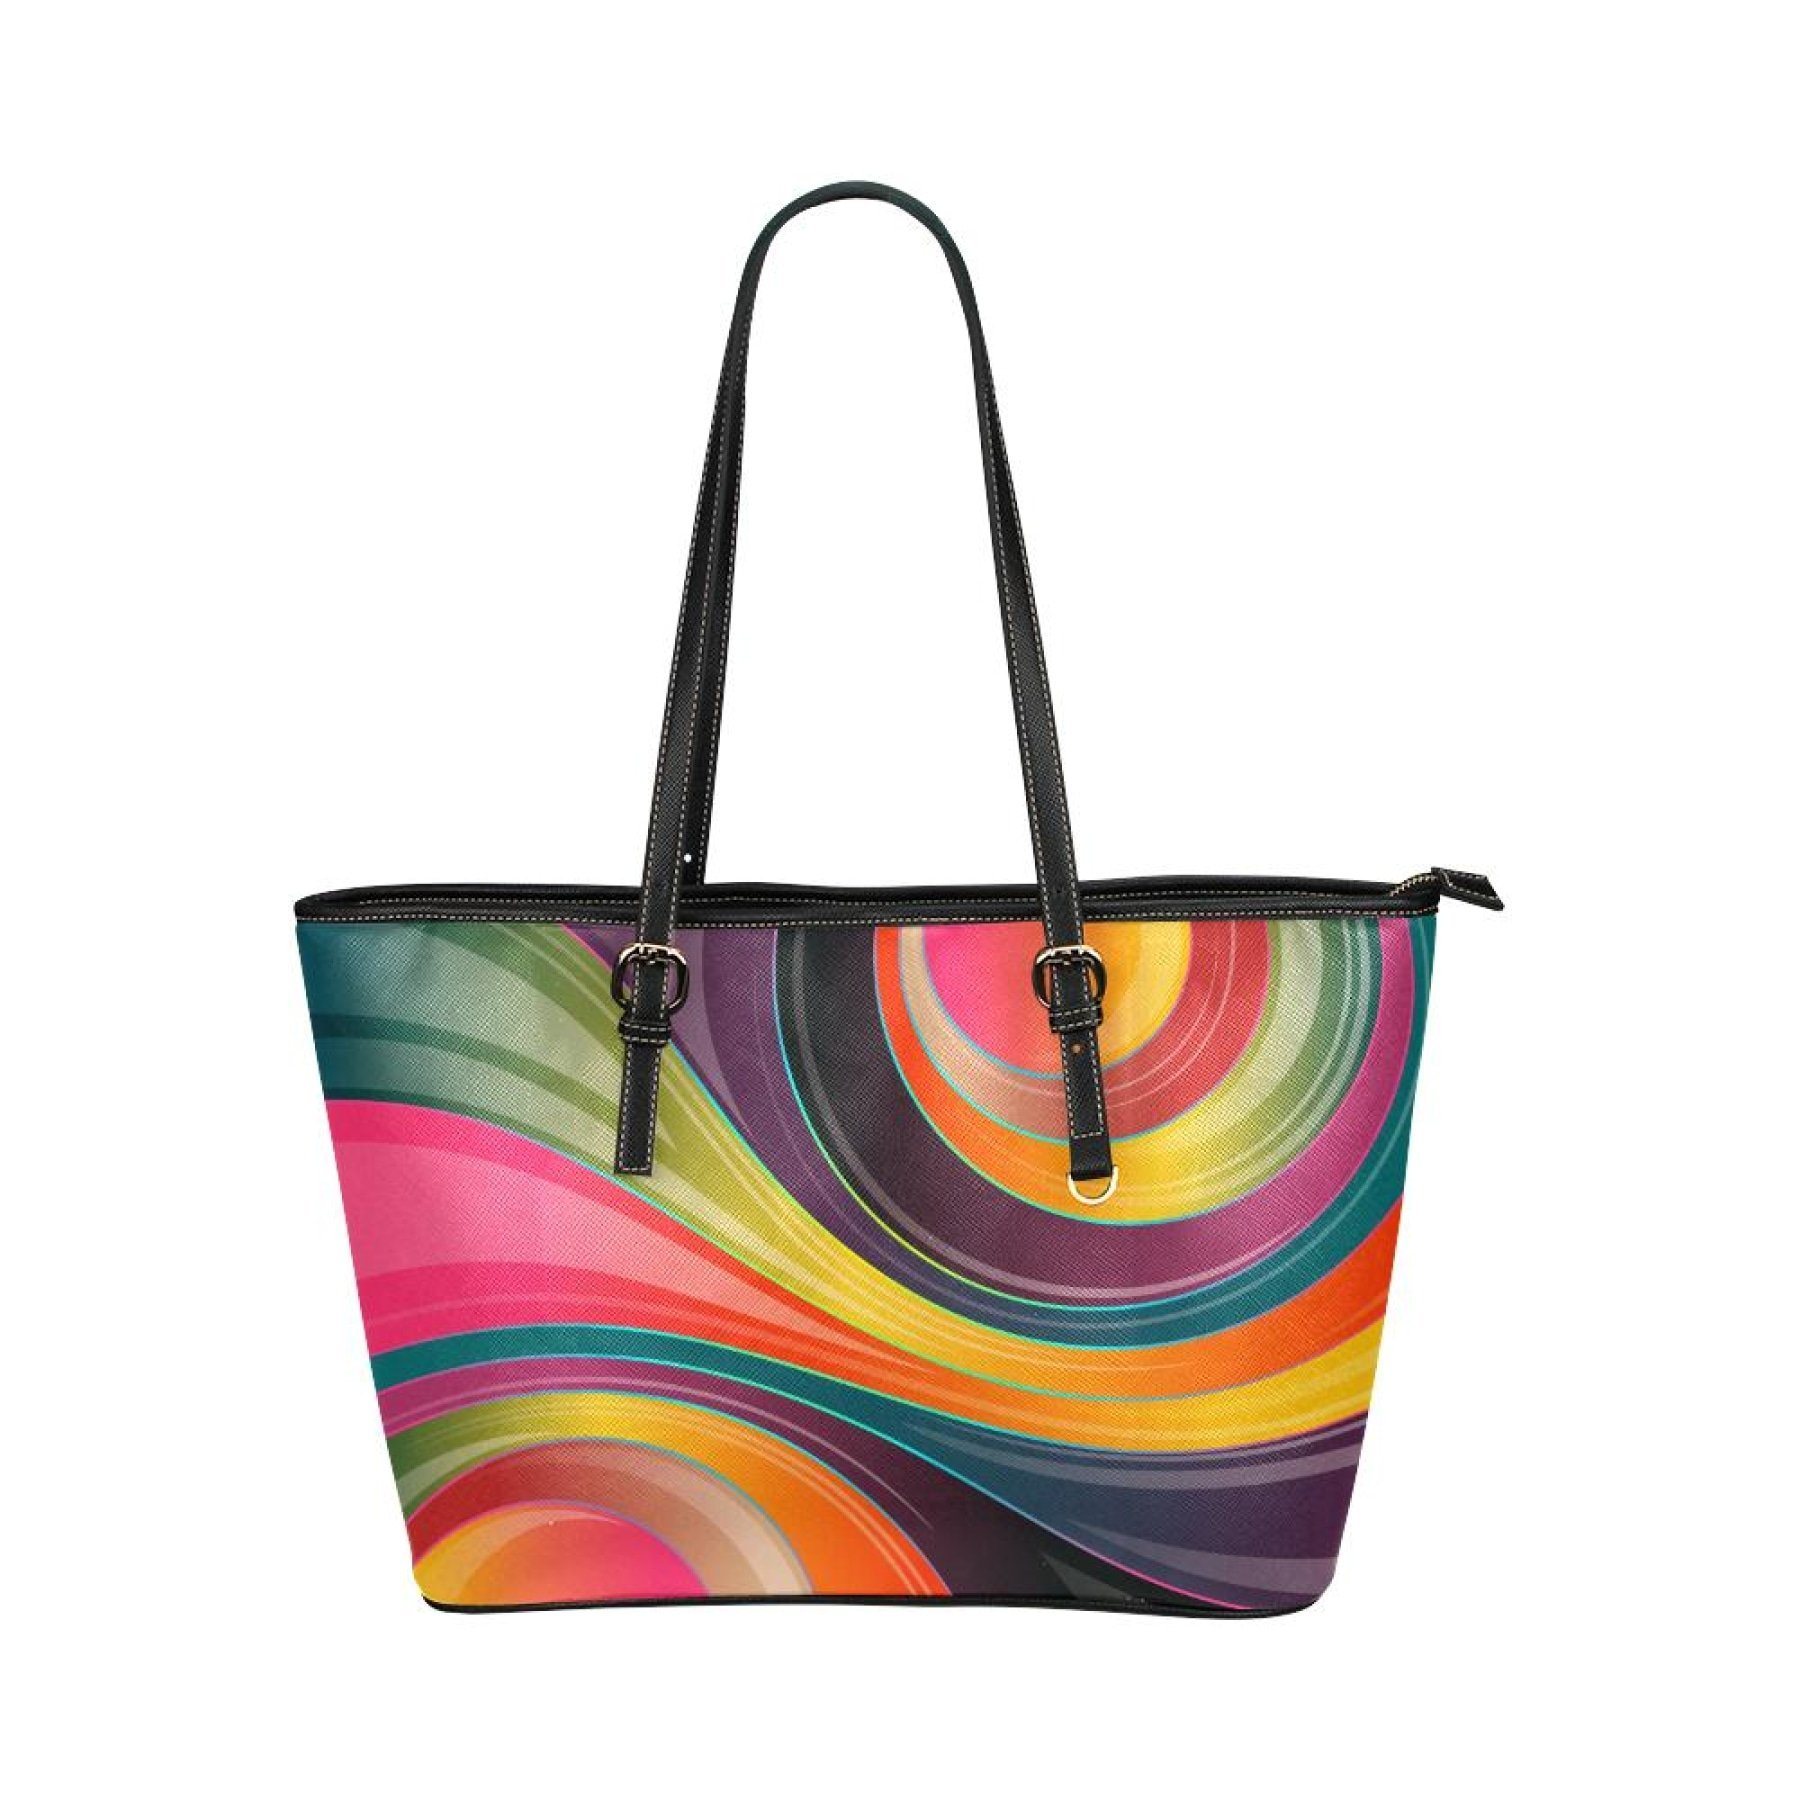 Colorful Circular Geometric Style Tote Bag 17